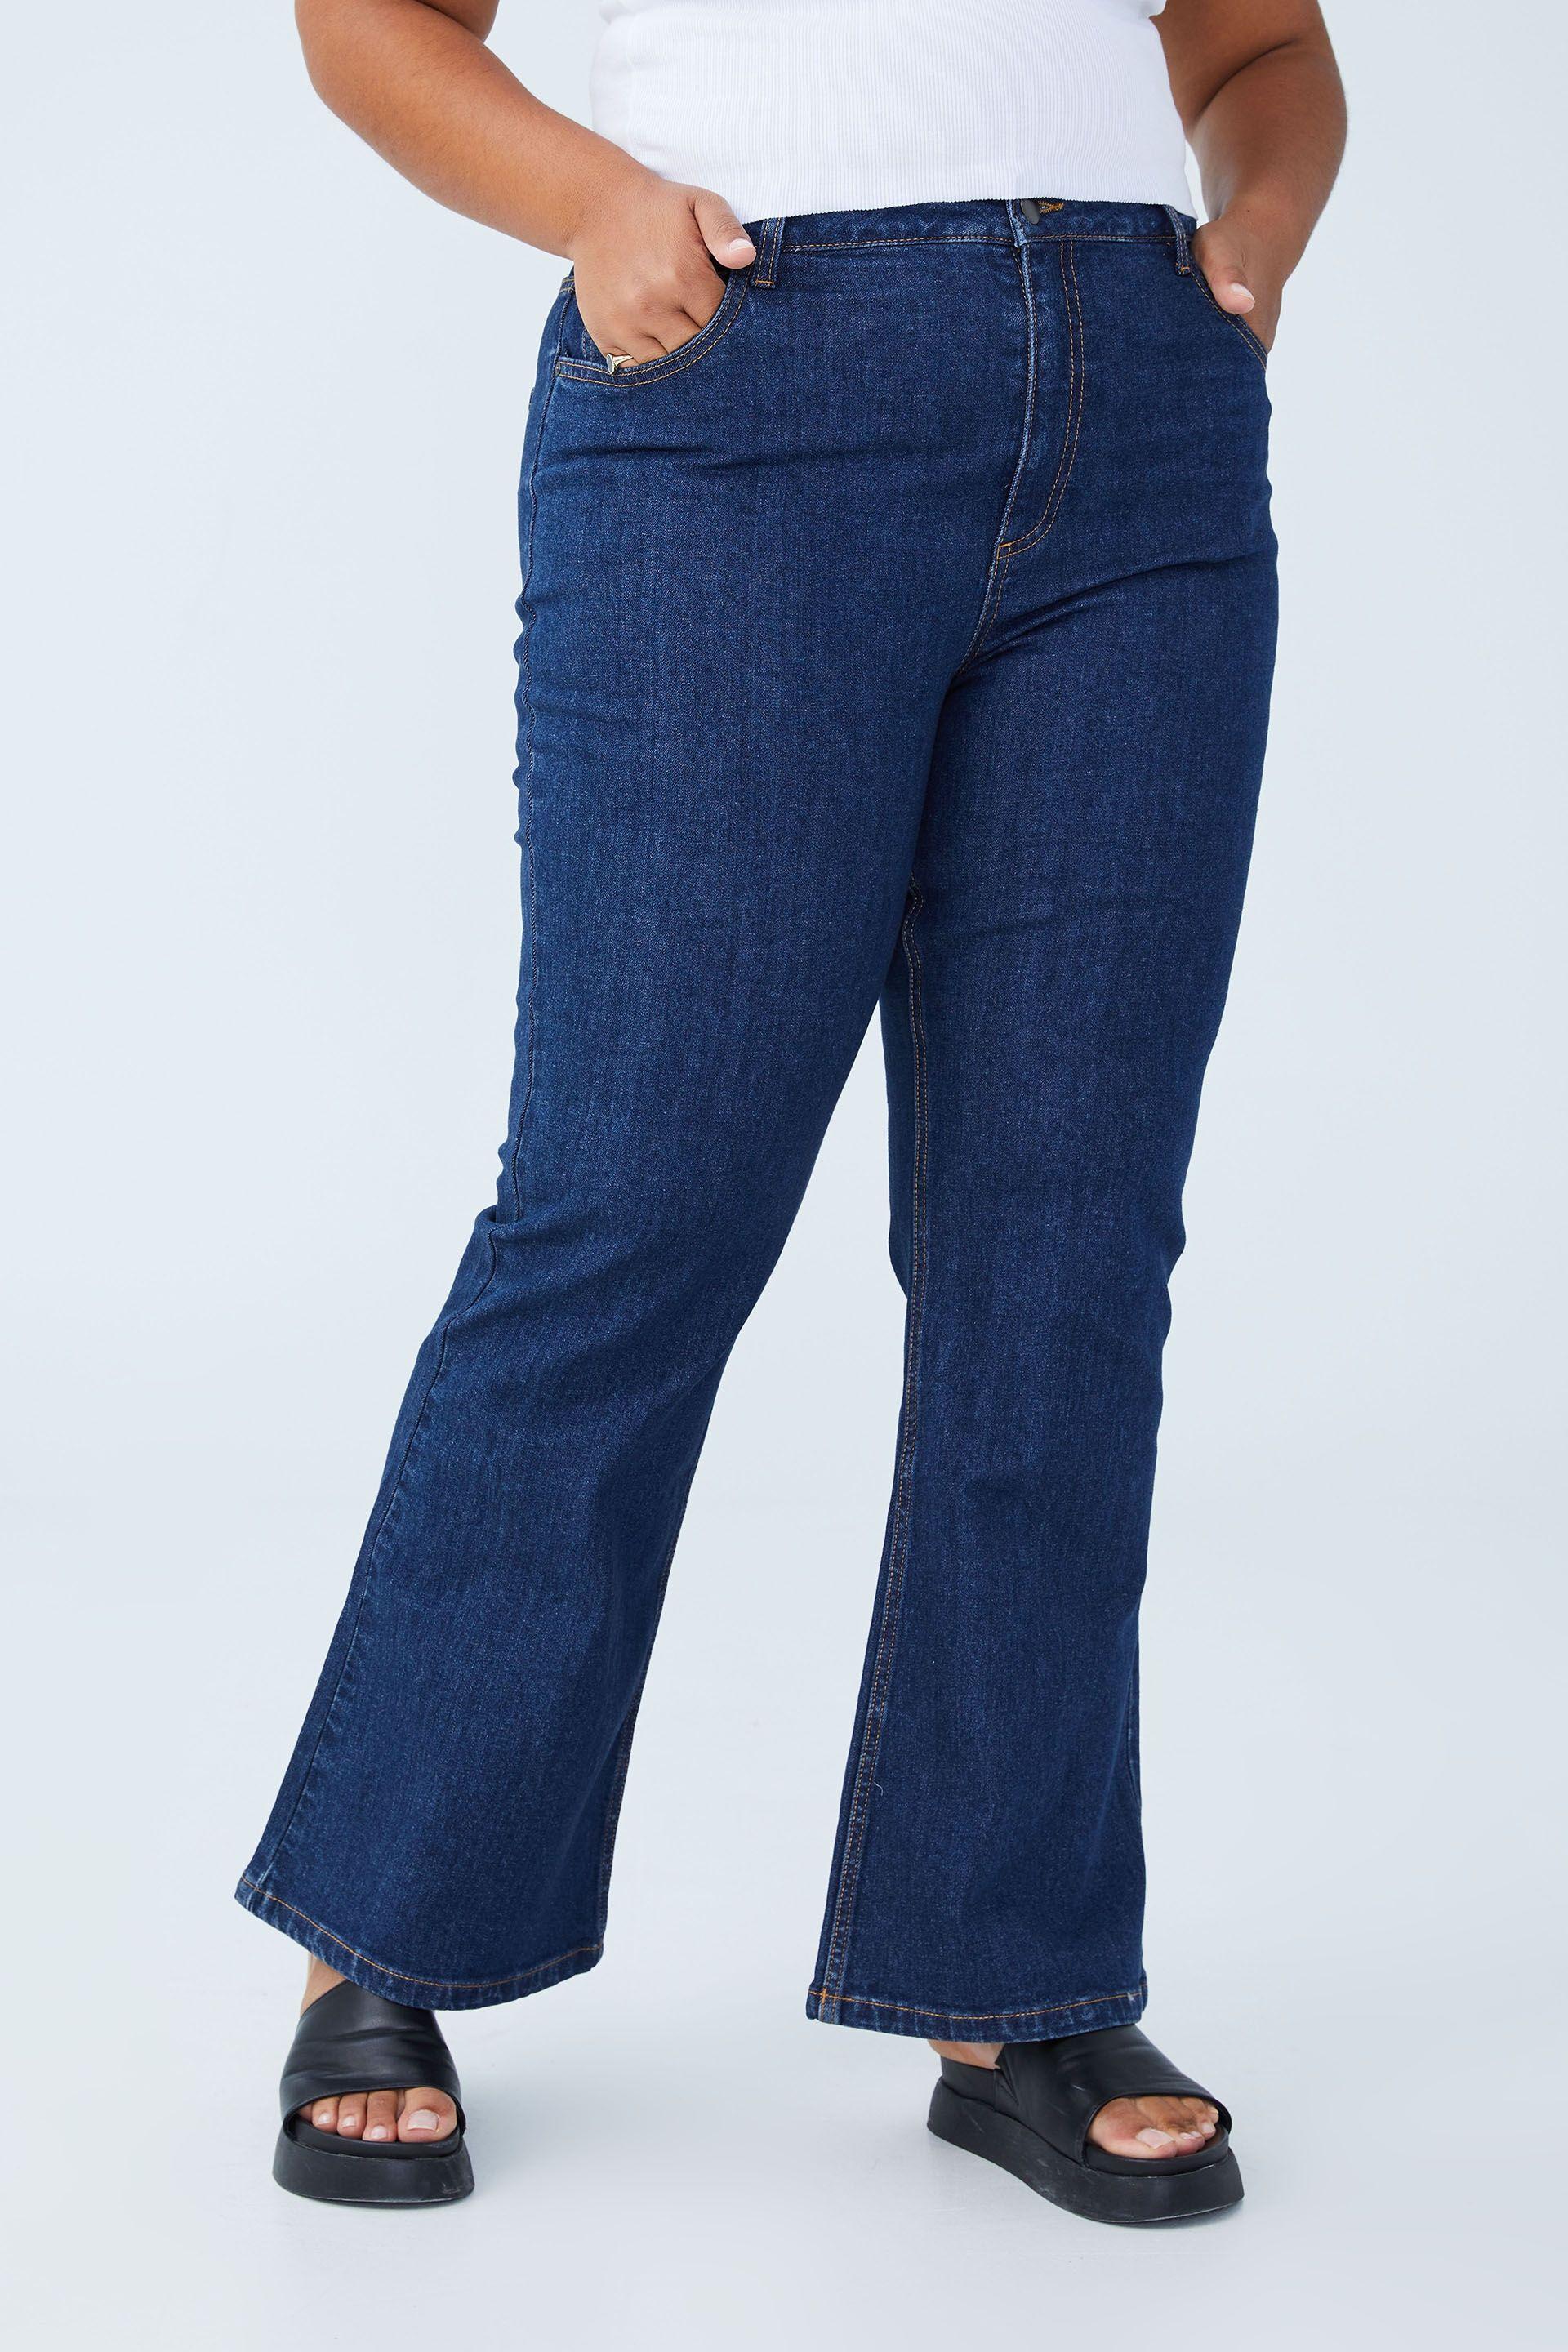 Curve original flare jean - rinse Cotton On Jeans | Superbalist.com